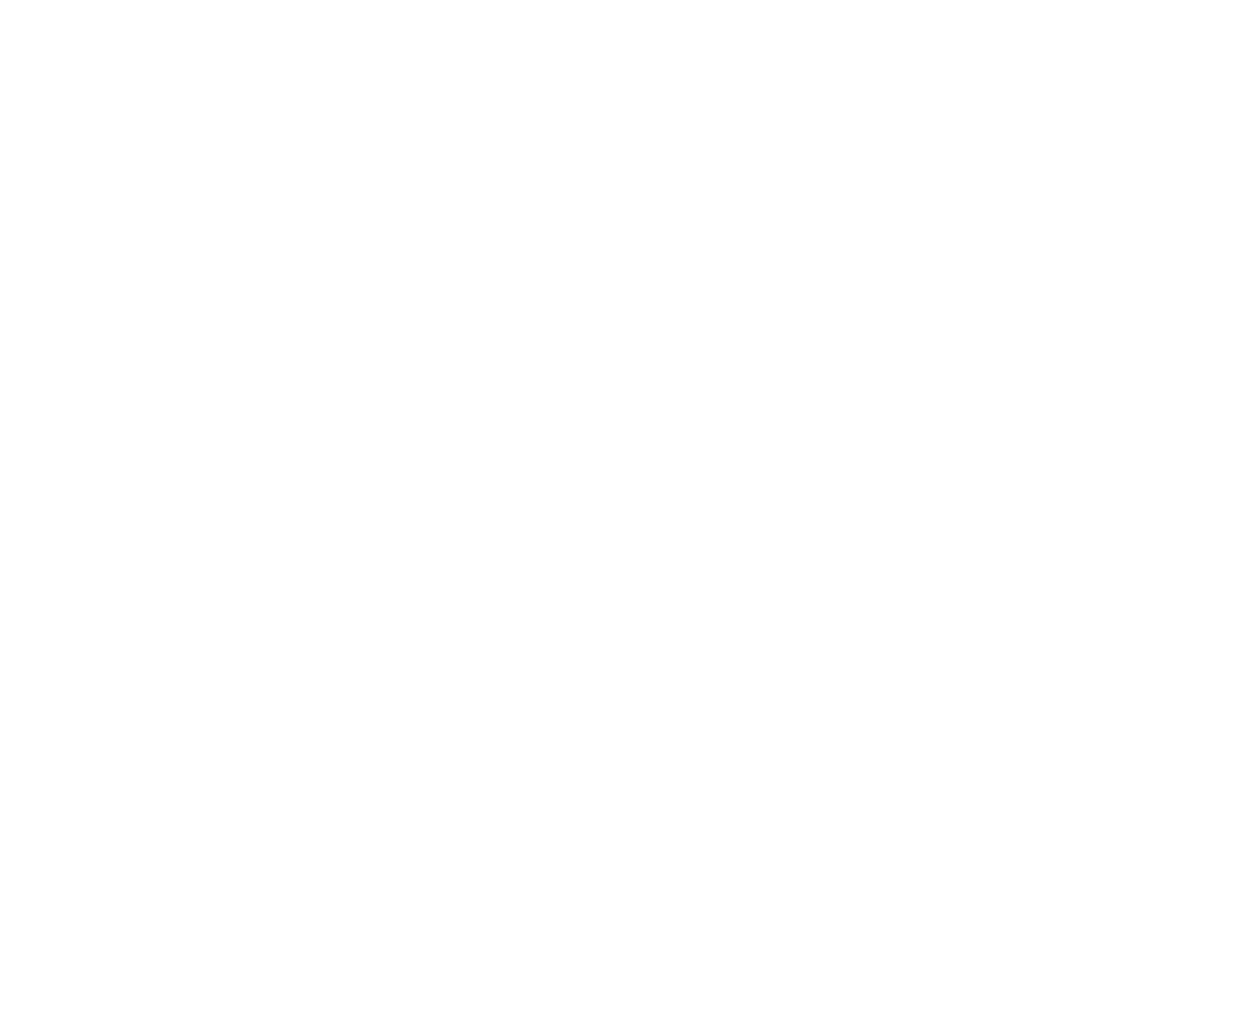 SoccerHead